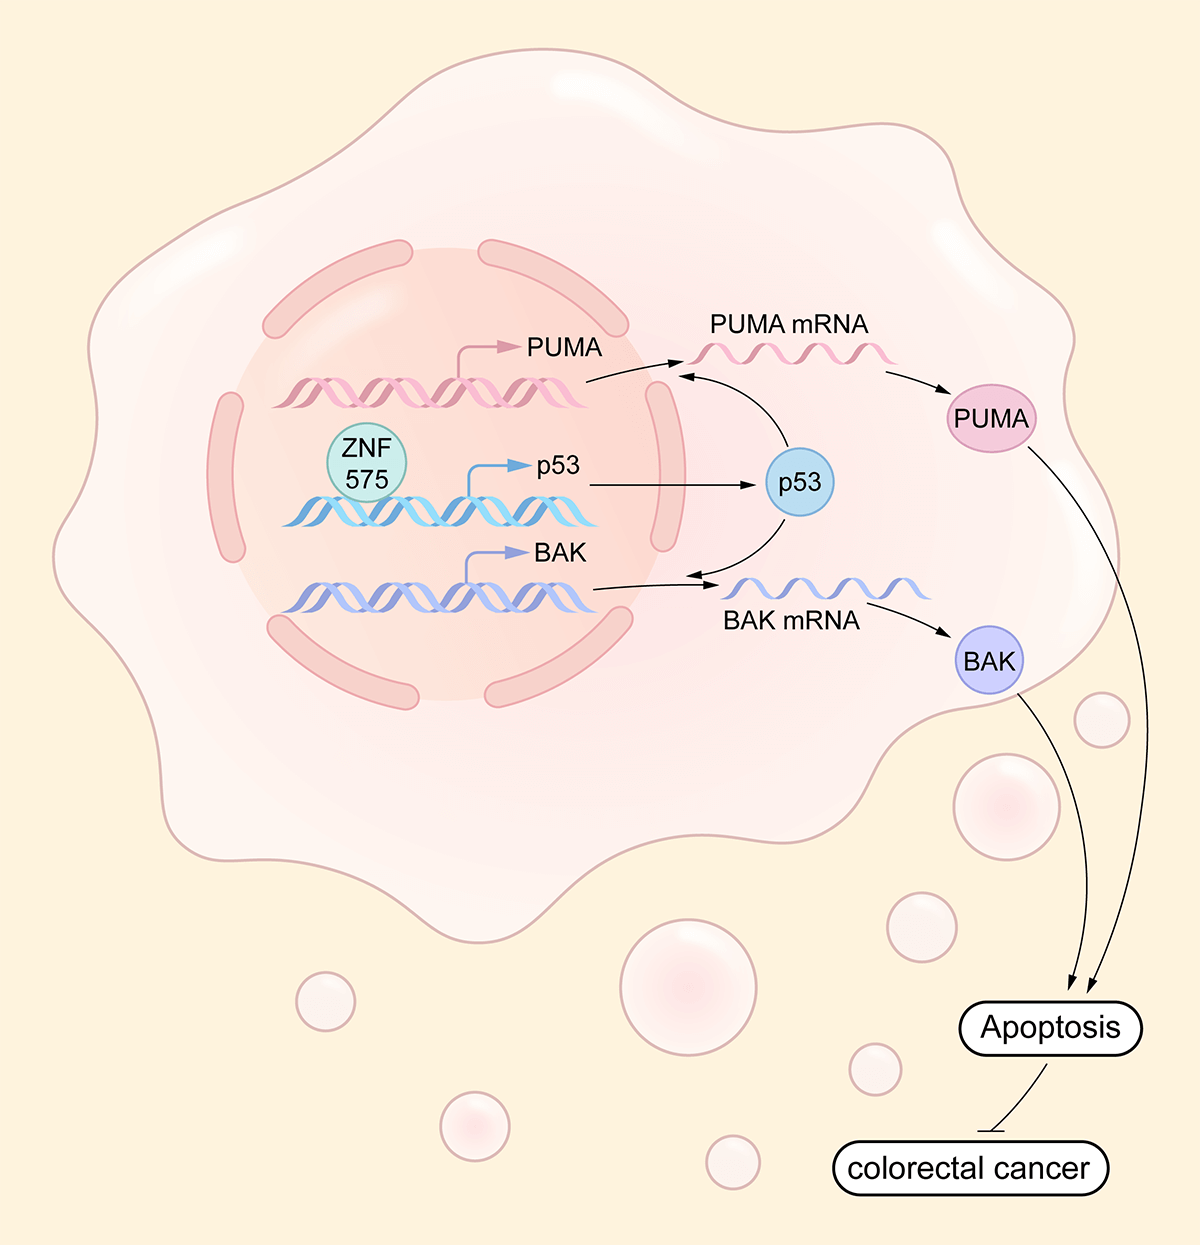 The zinc figure protein ZNF575 impairs colorectal cancer growth via promoting p53 transcription